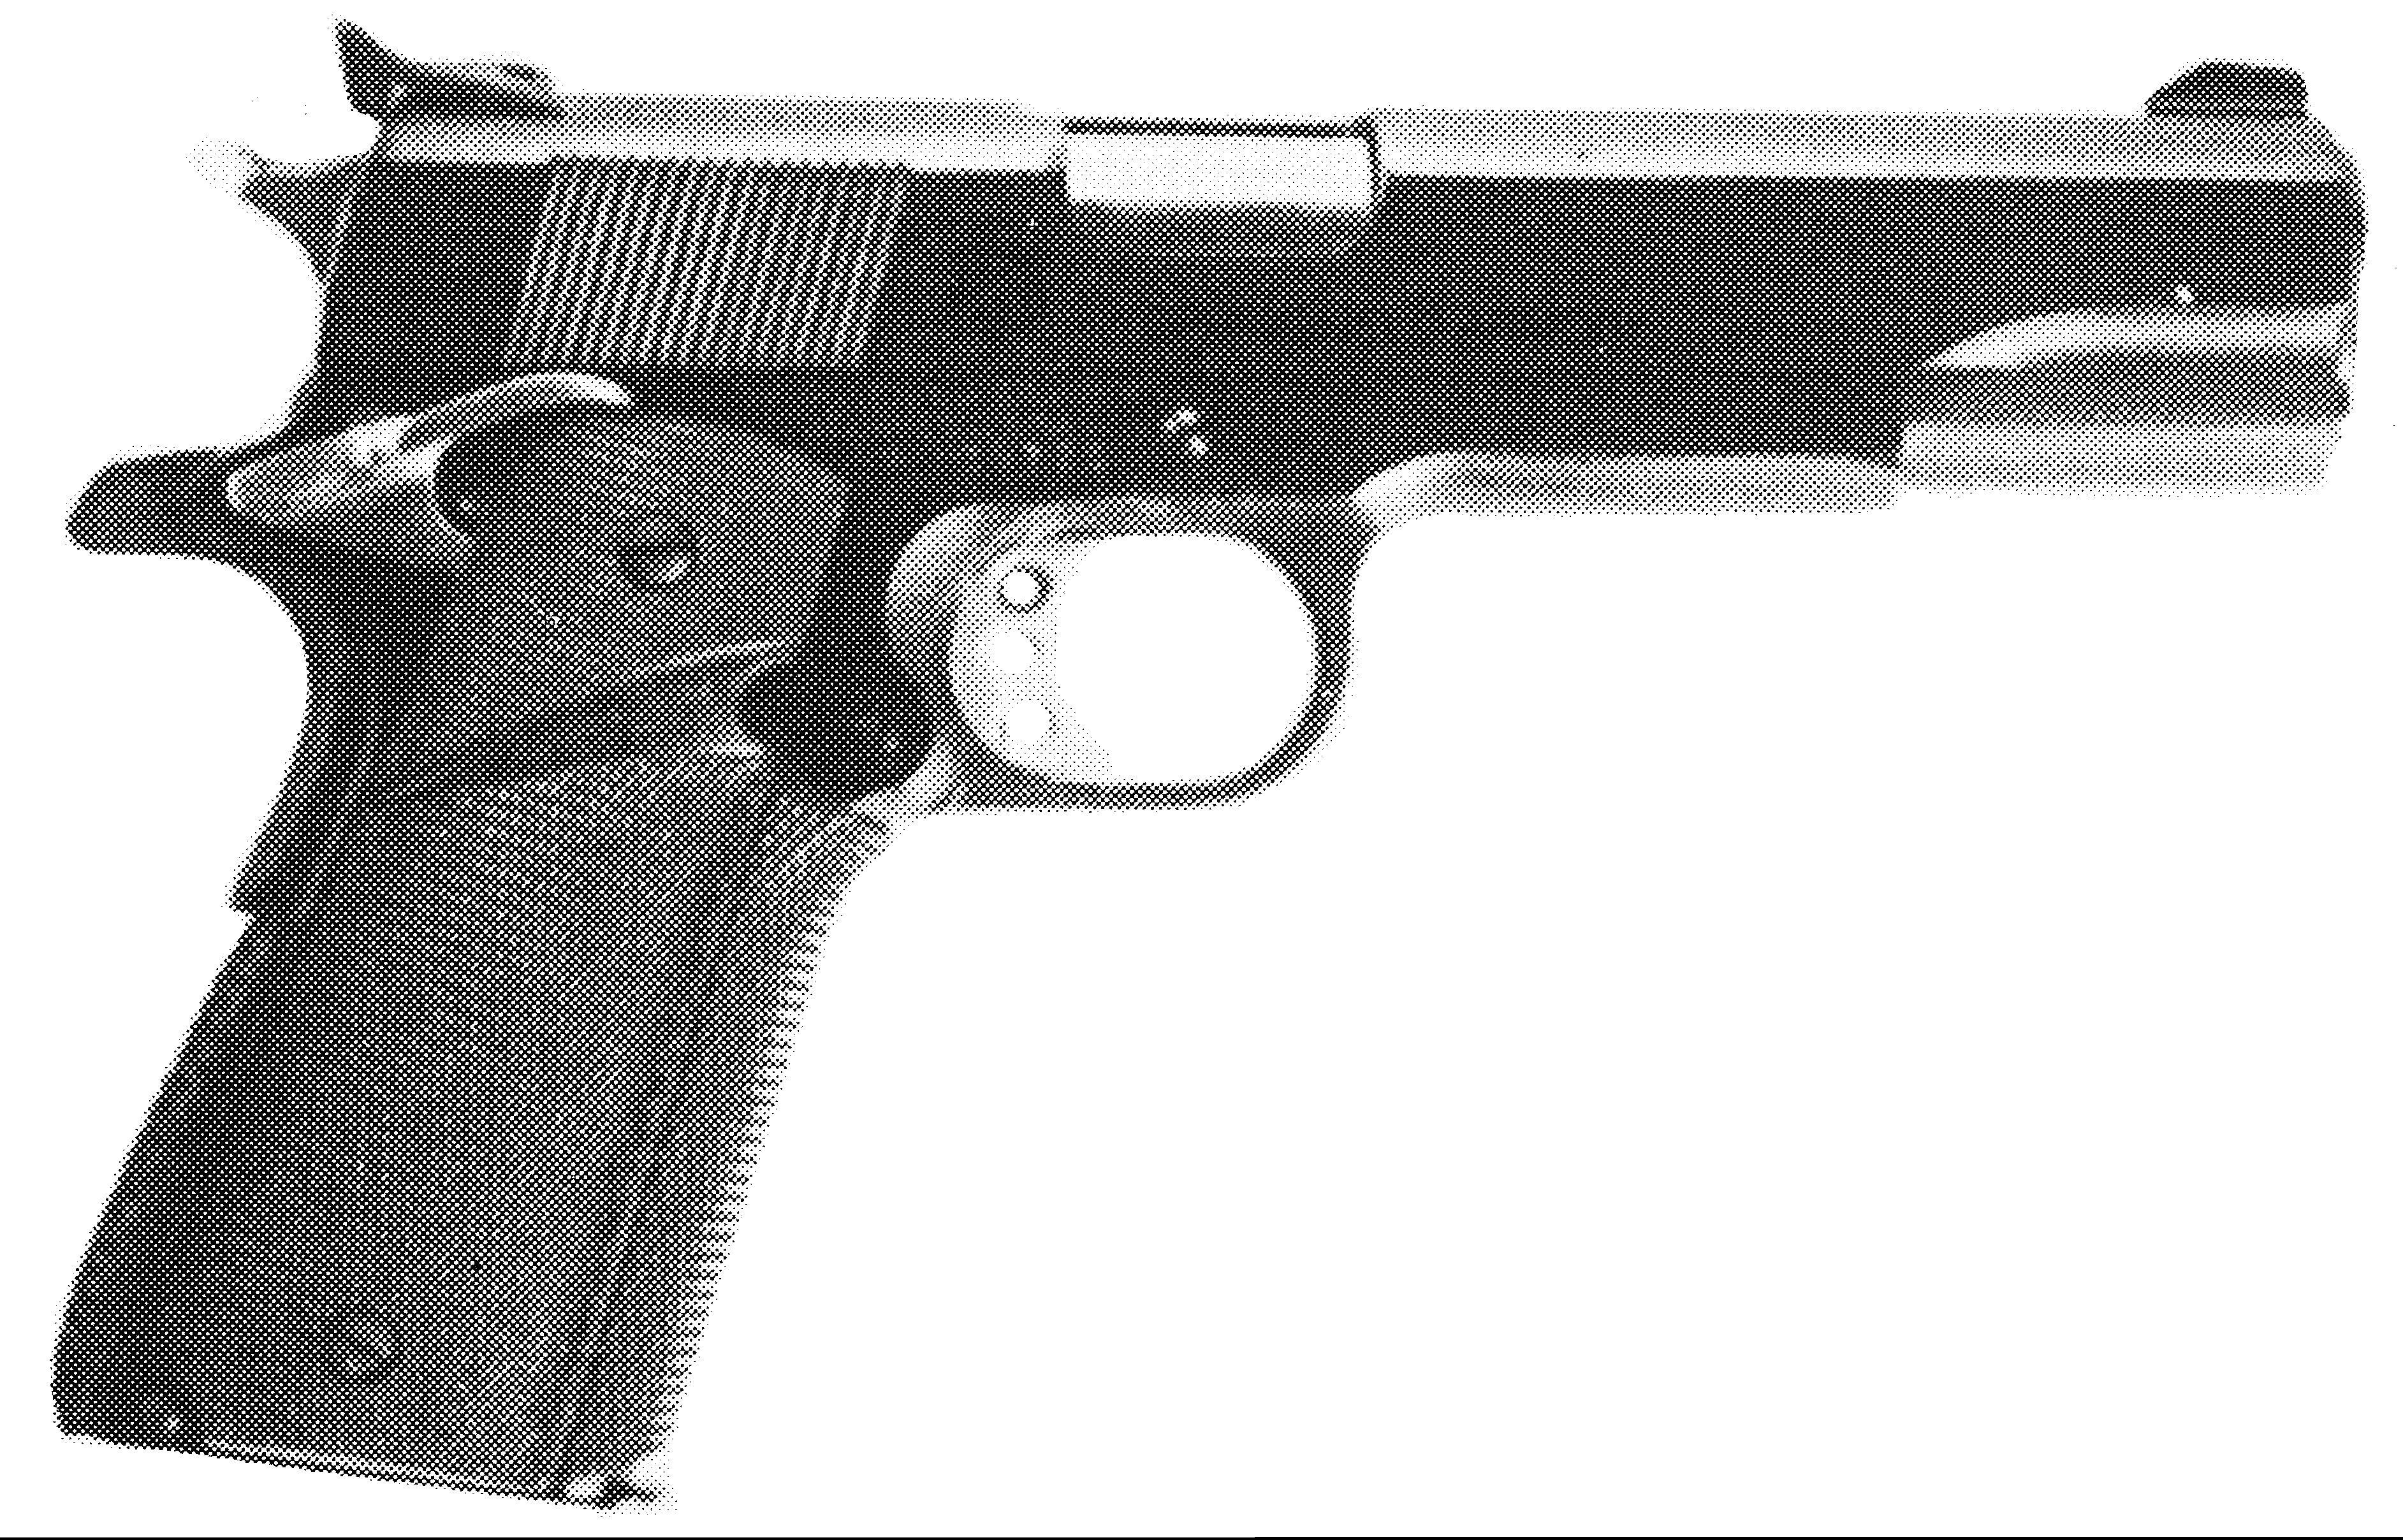 A Model Master Grade Competition Pistol